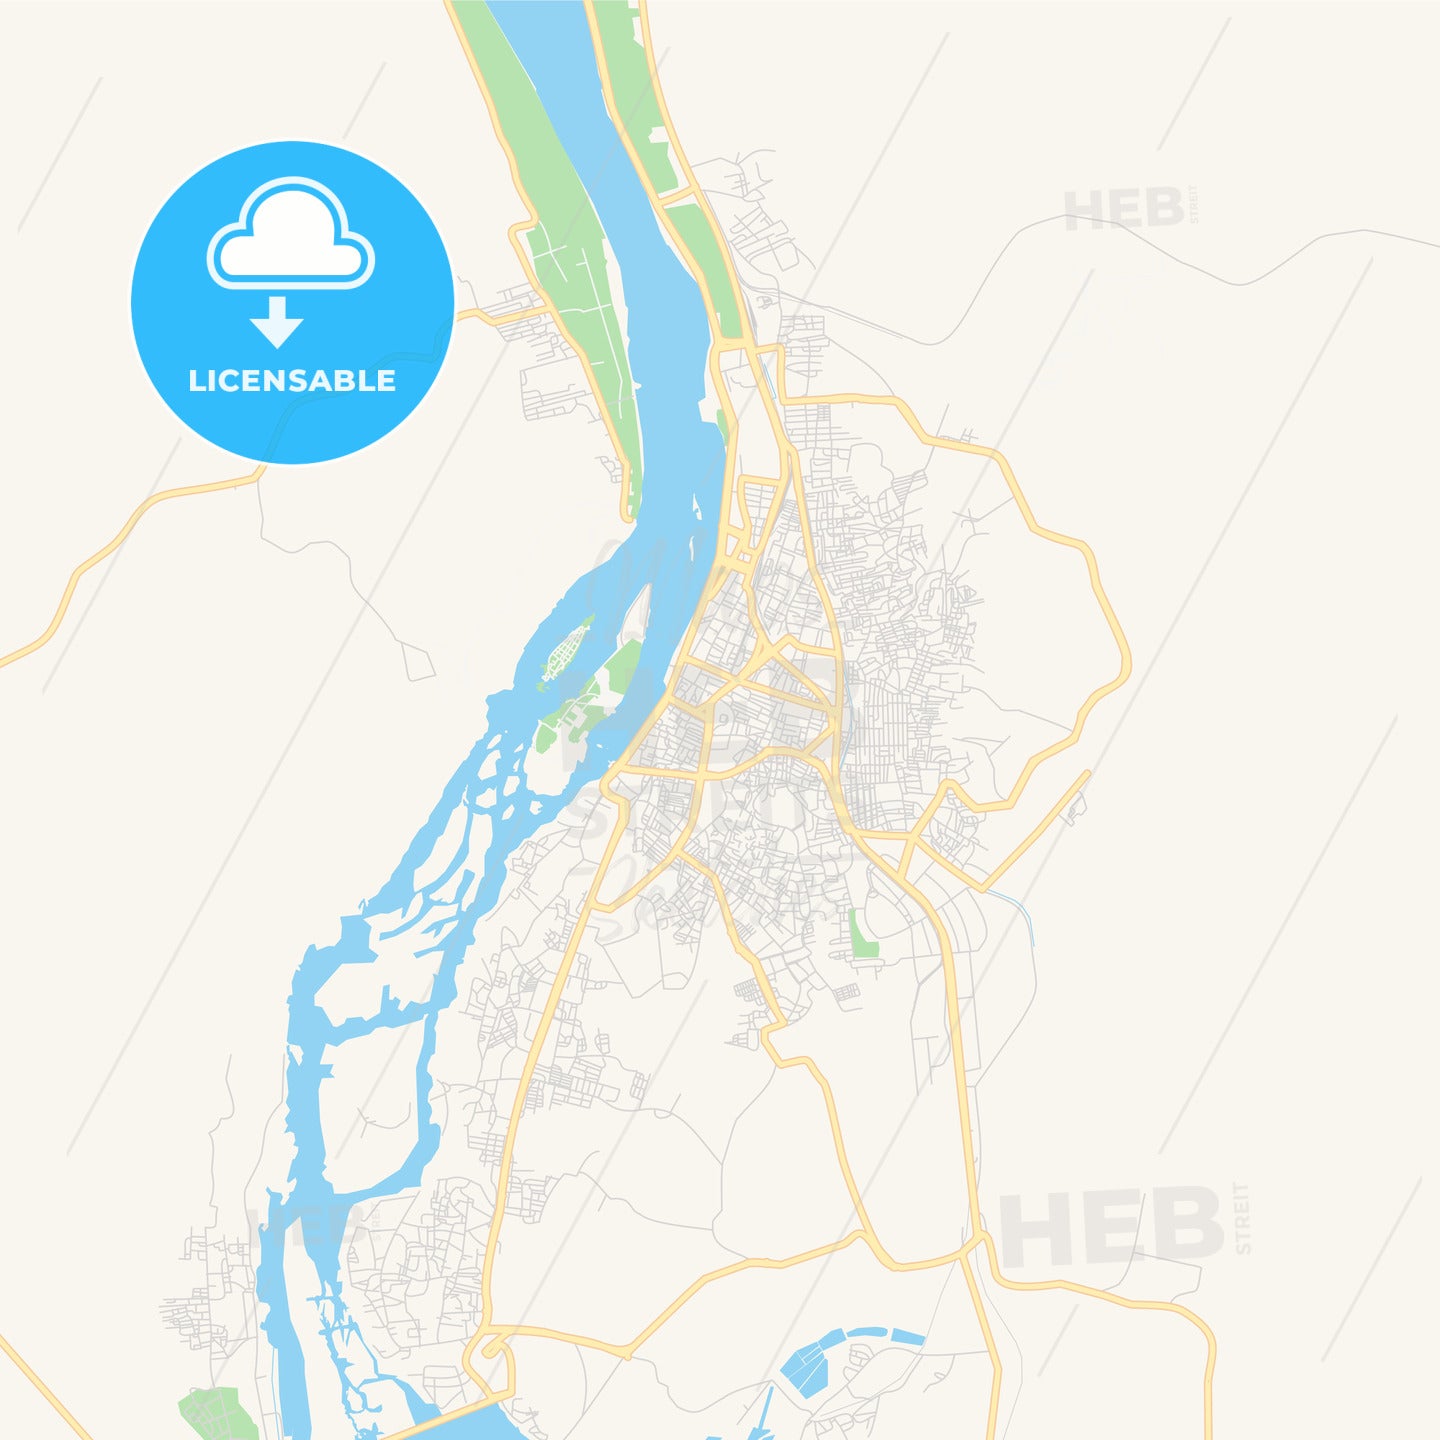 Printable street map of Aswan, Egypt